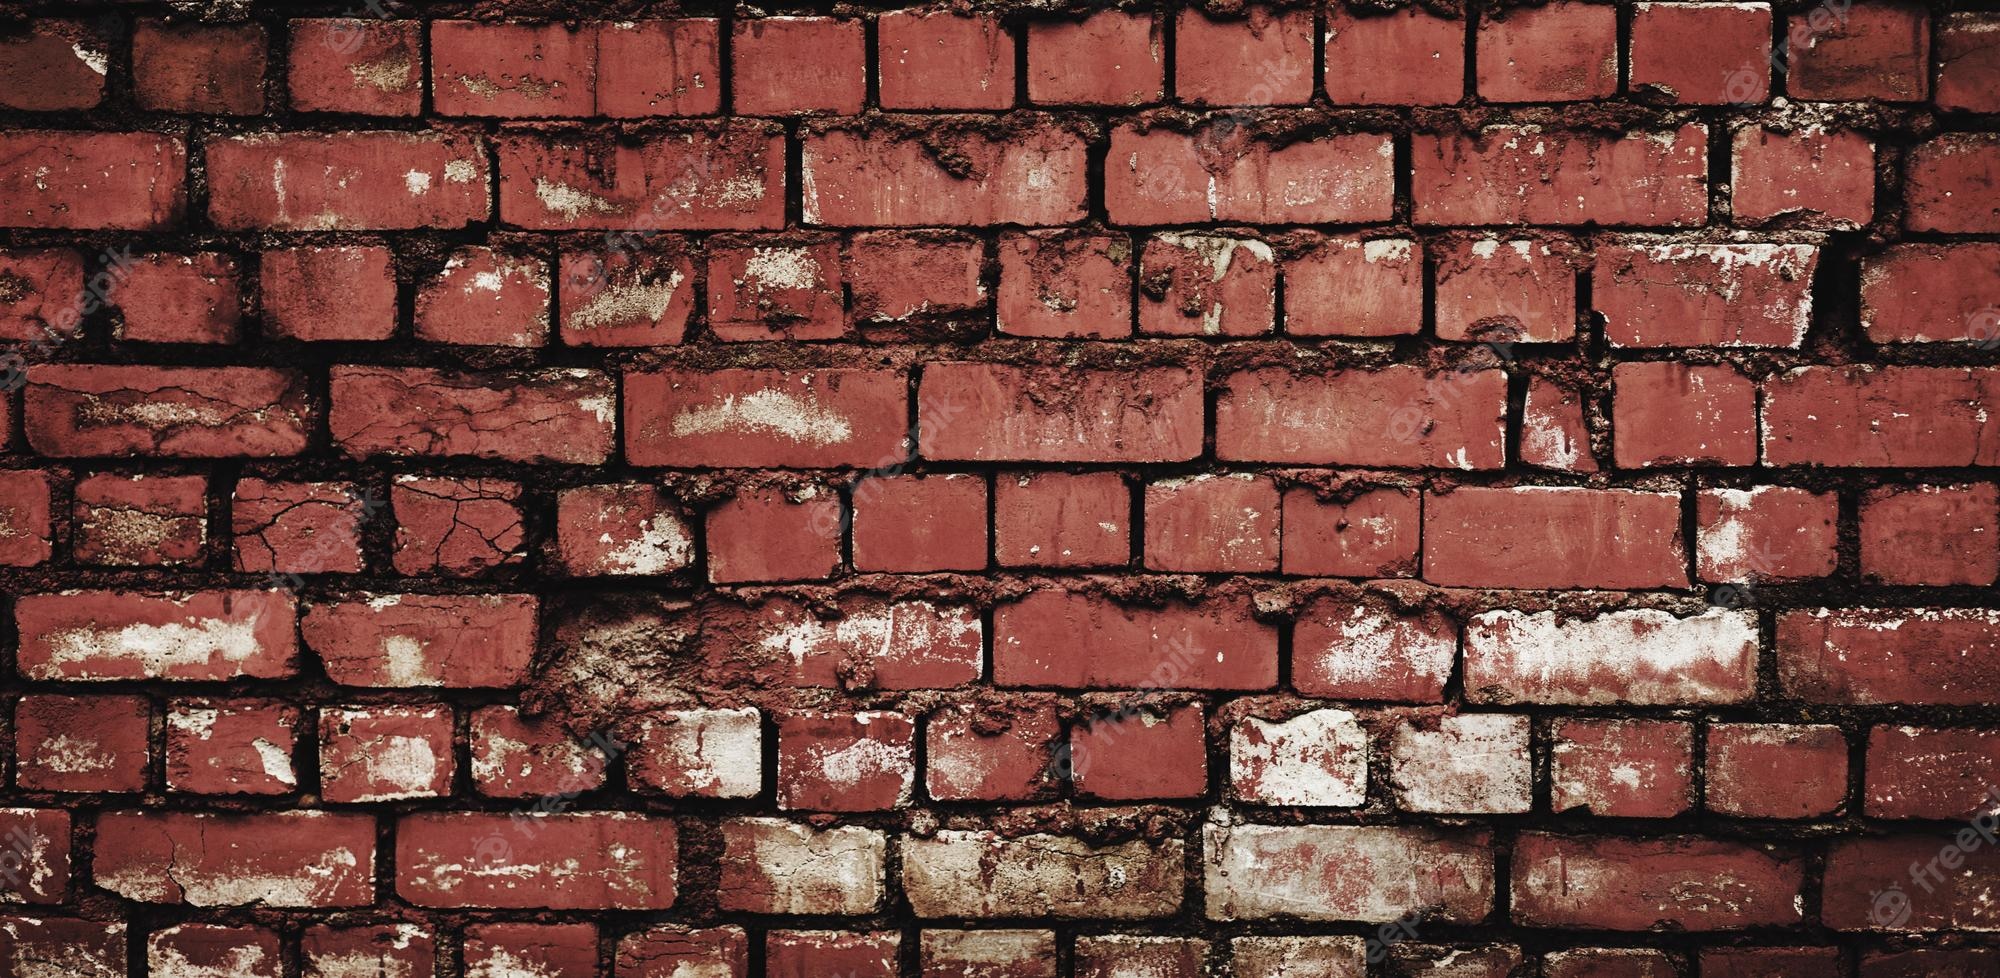 Premium Photo. Brick wall background brick house design backdrop